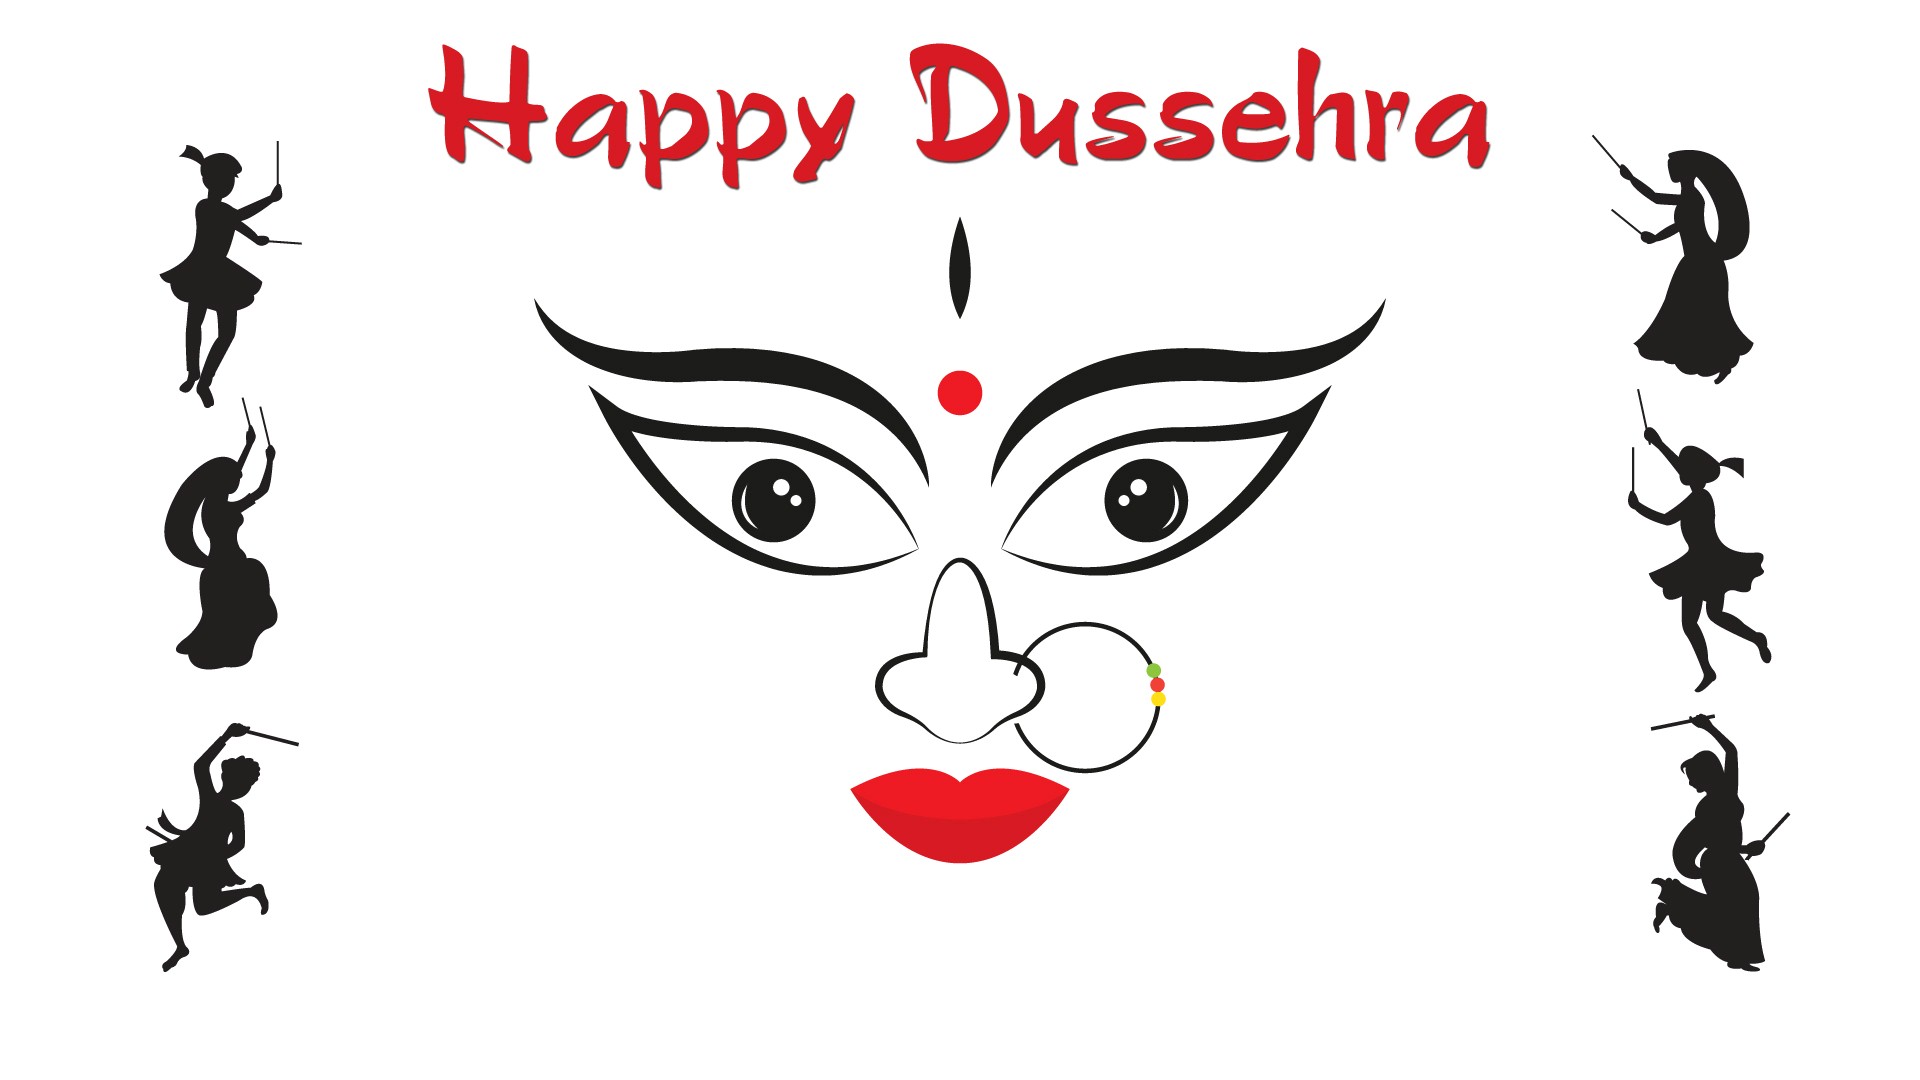 Happy Dussehra 2018